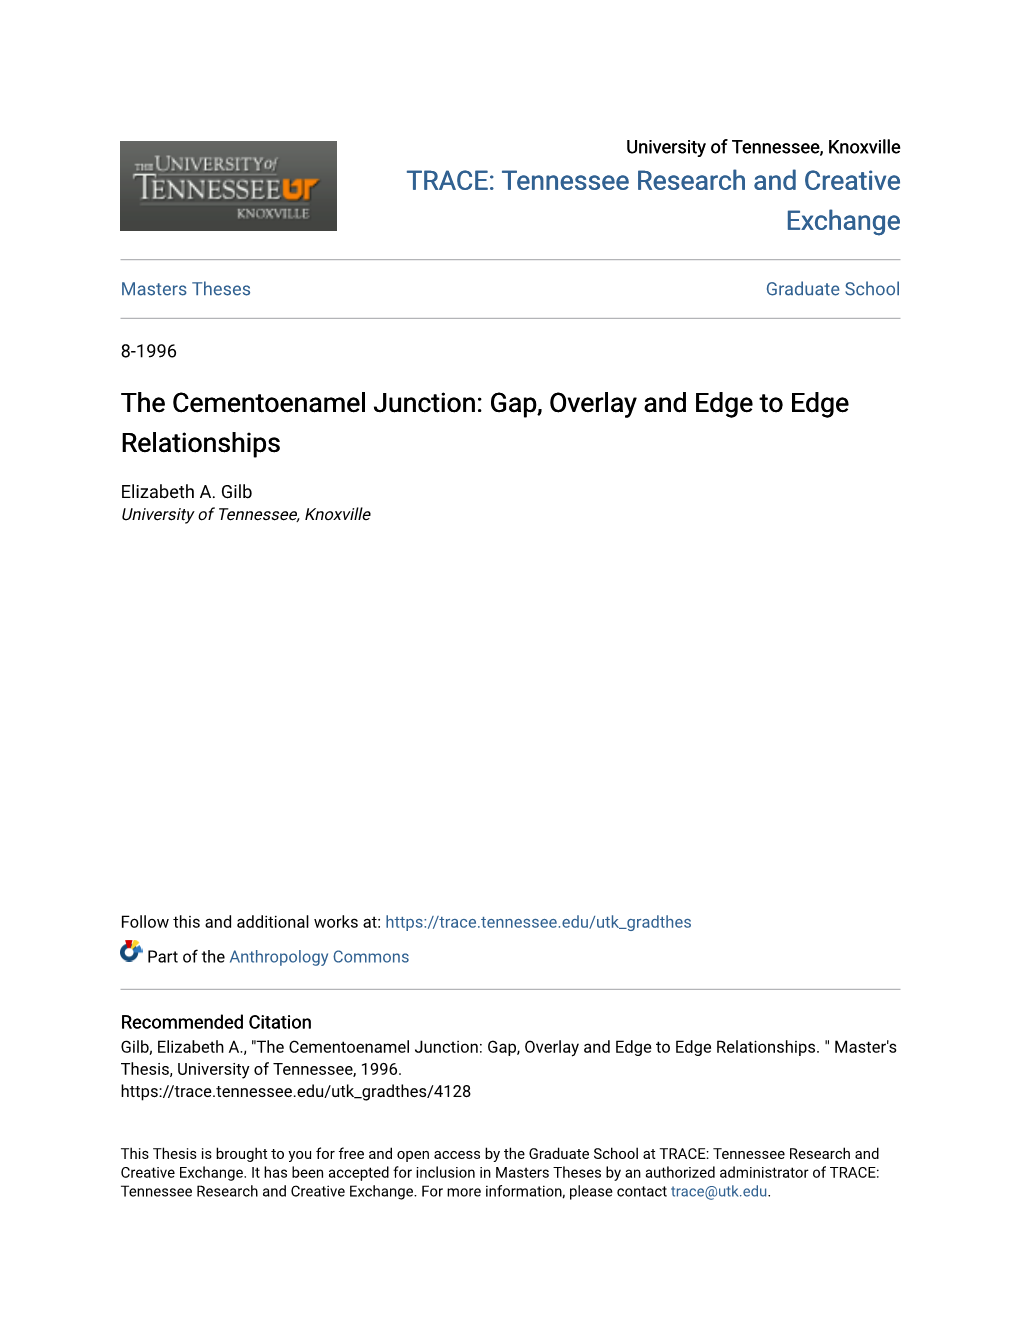 The Cementoenamel Junction: Gap, Overlay and Edge to Edge Relationships